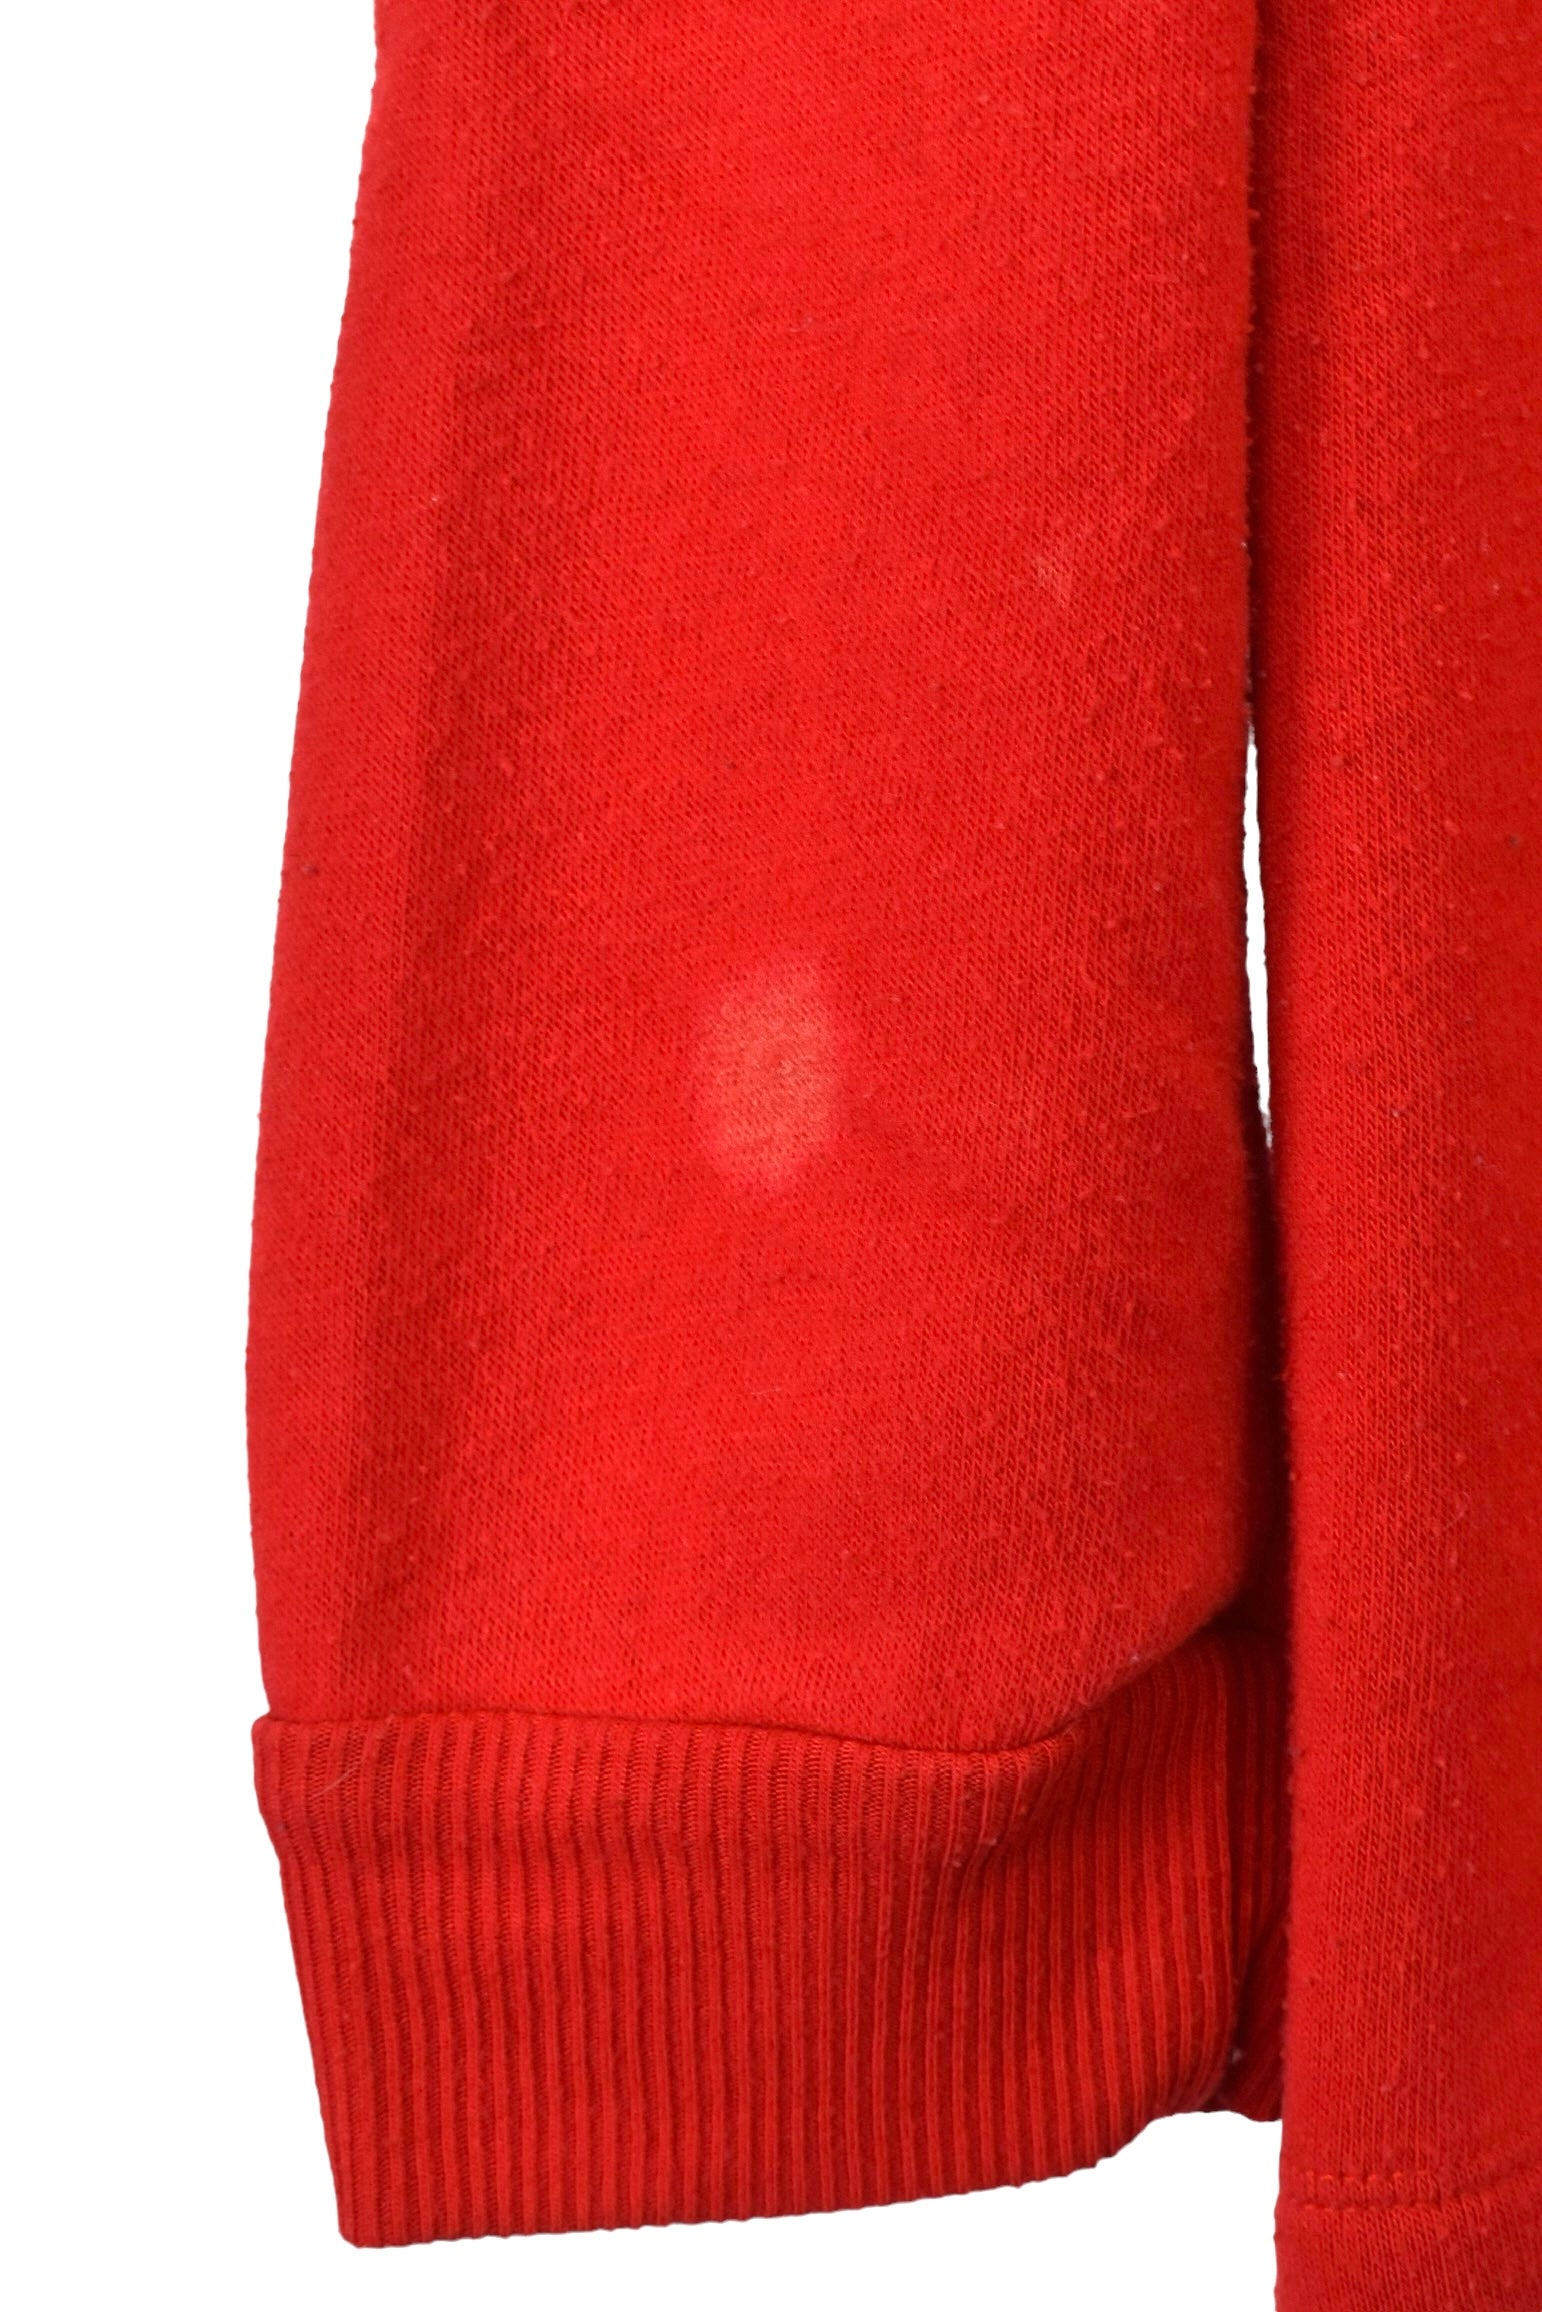 Women's modern Mickey Mouse hoodie (XL), red Disney graphic sweatshirt